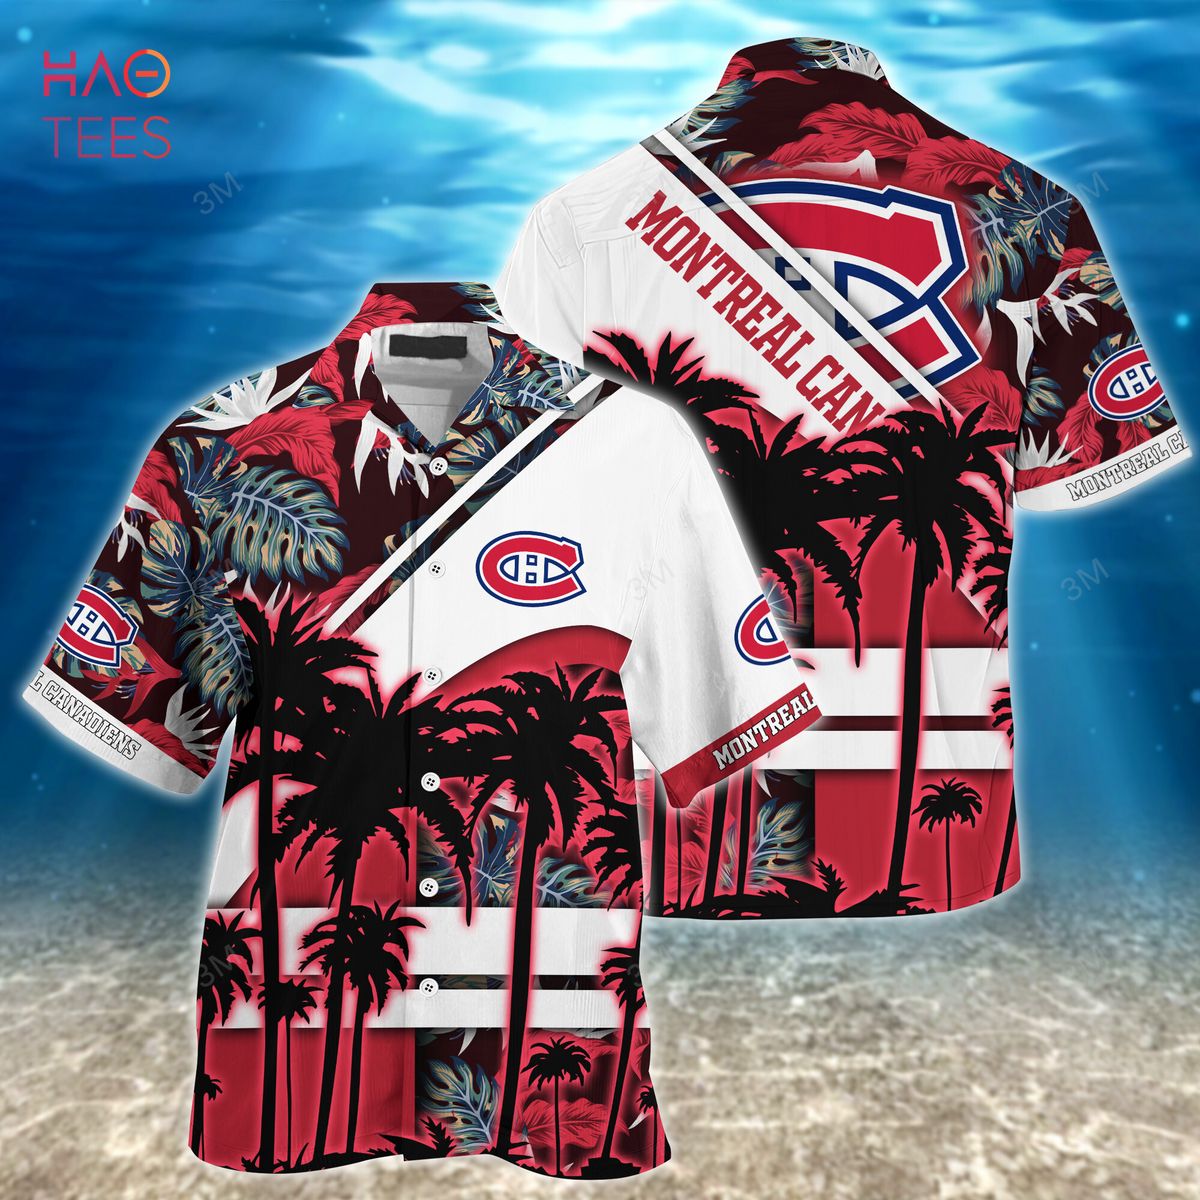 Vancouver Canucks NHL Custom Name Hawaiian Shirt Hot Design For Fans